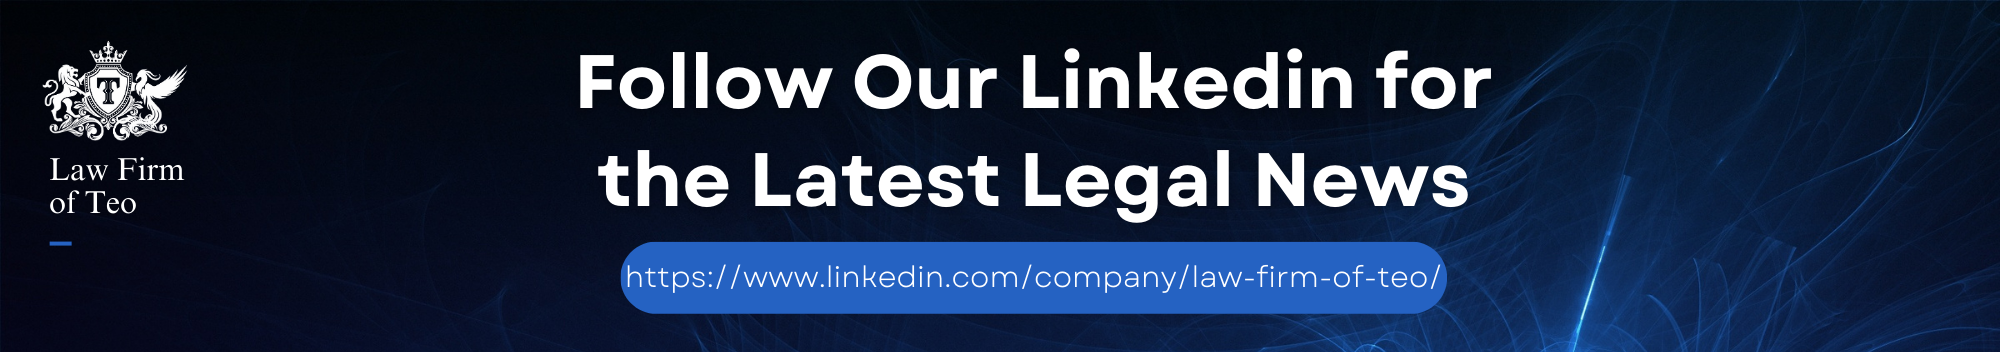 Law Firm of Teo - Blue Modern Company Slogan LinkedIn Banner